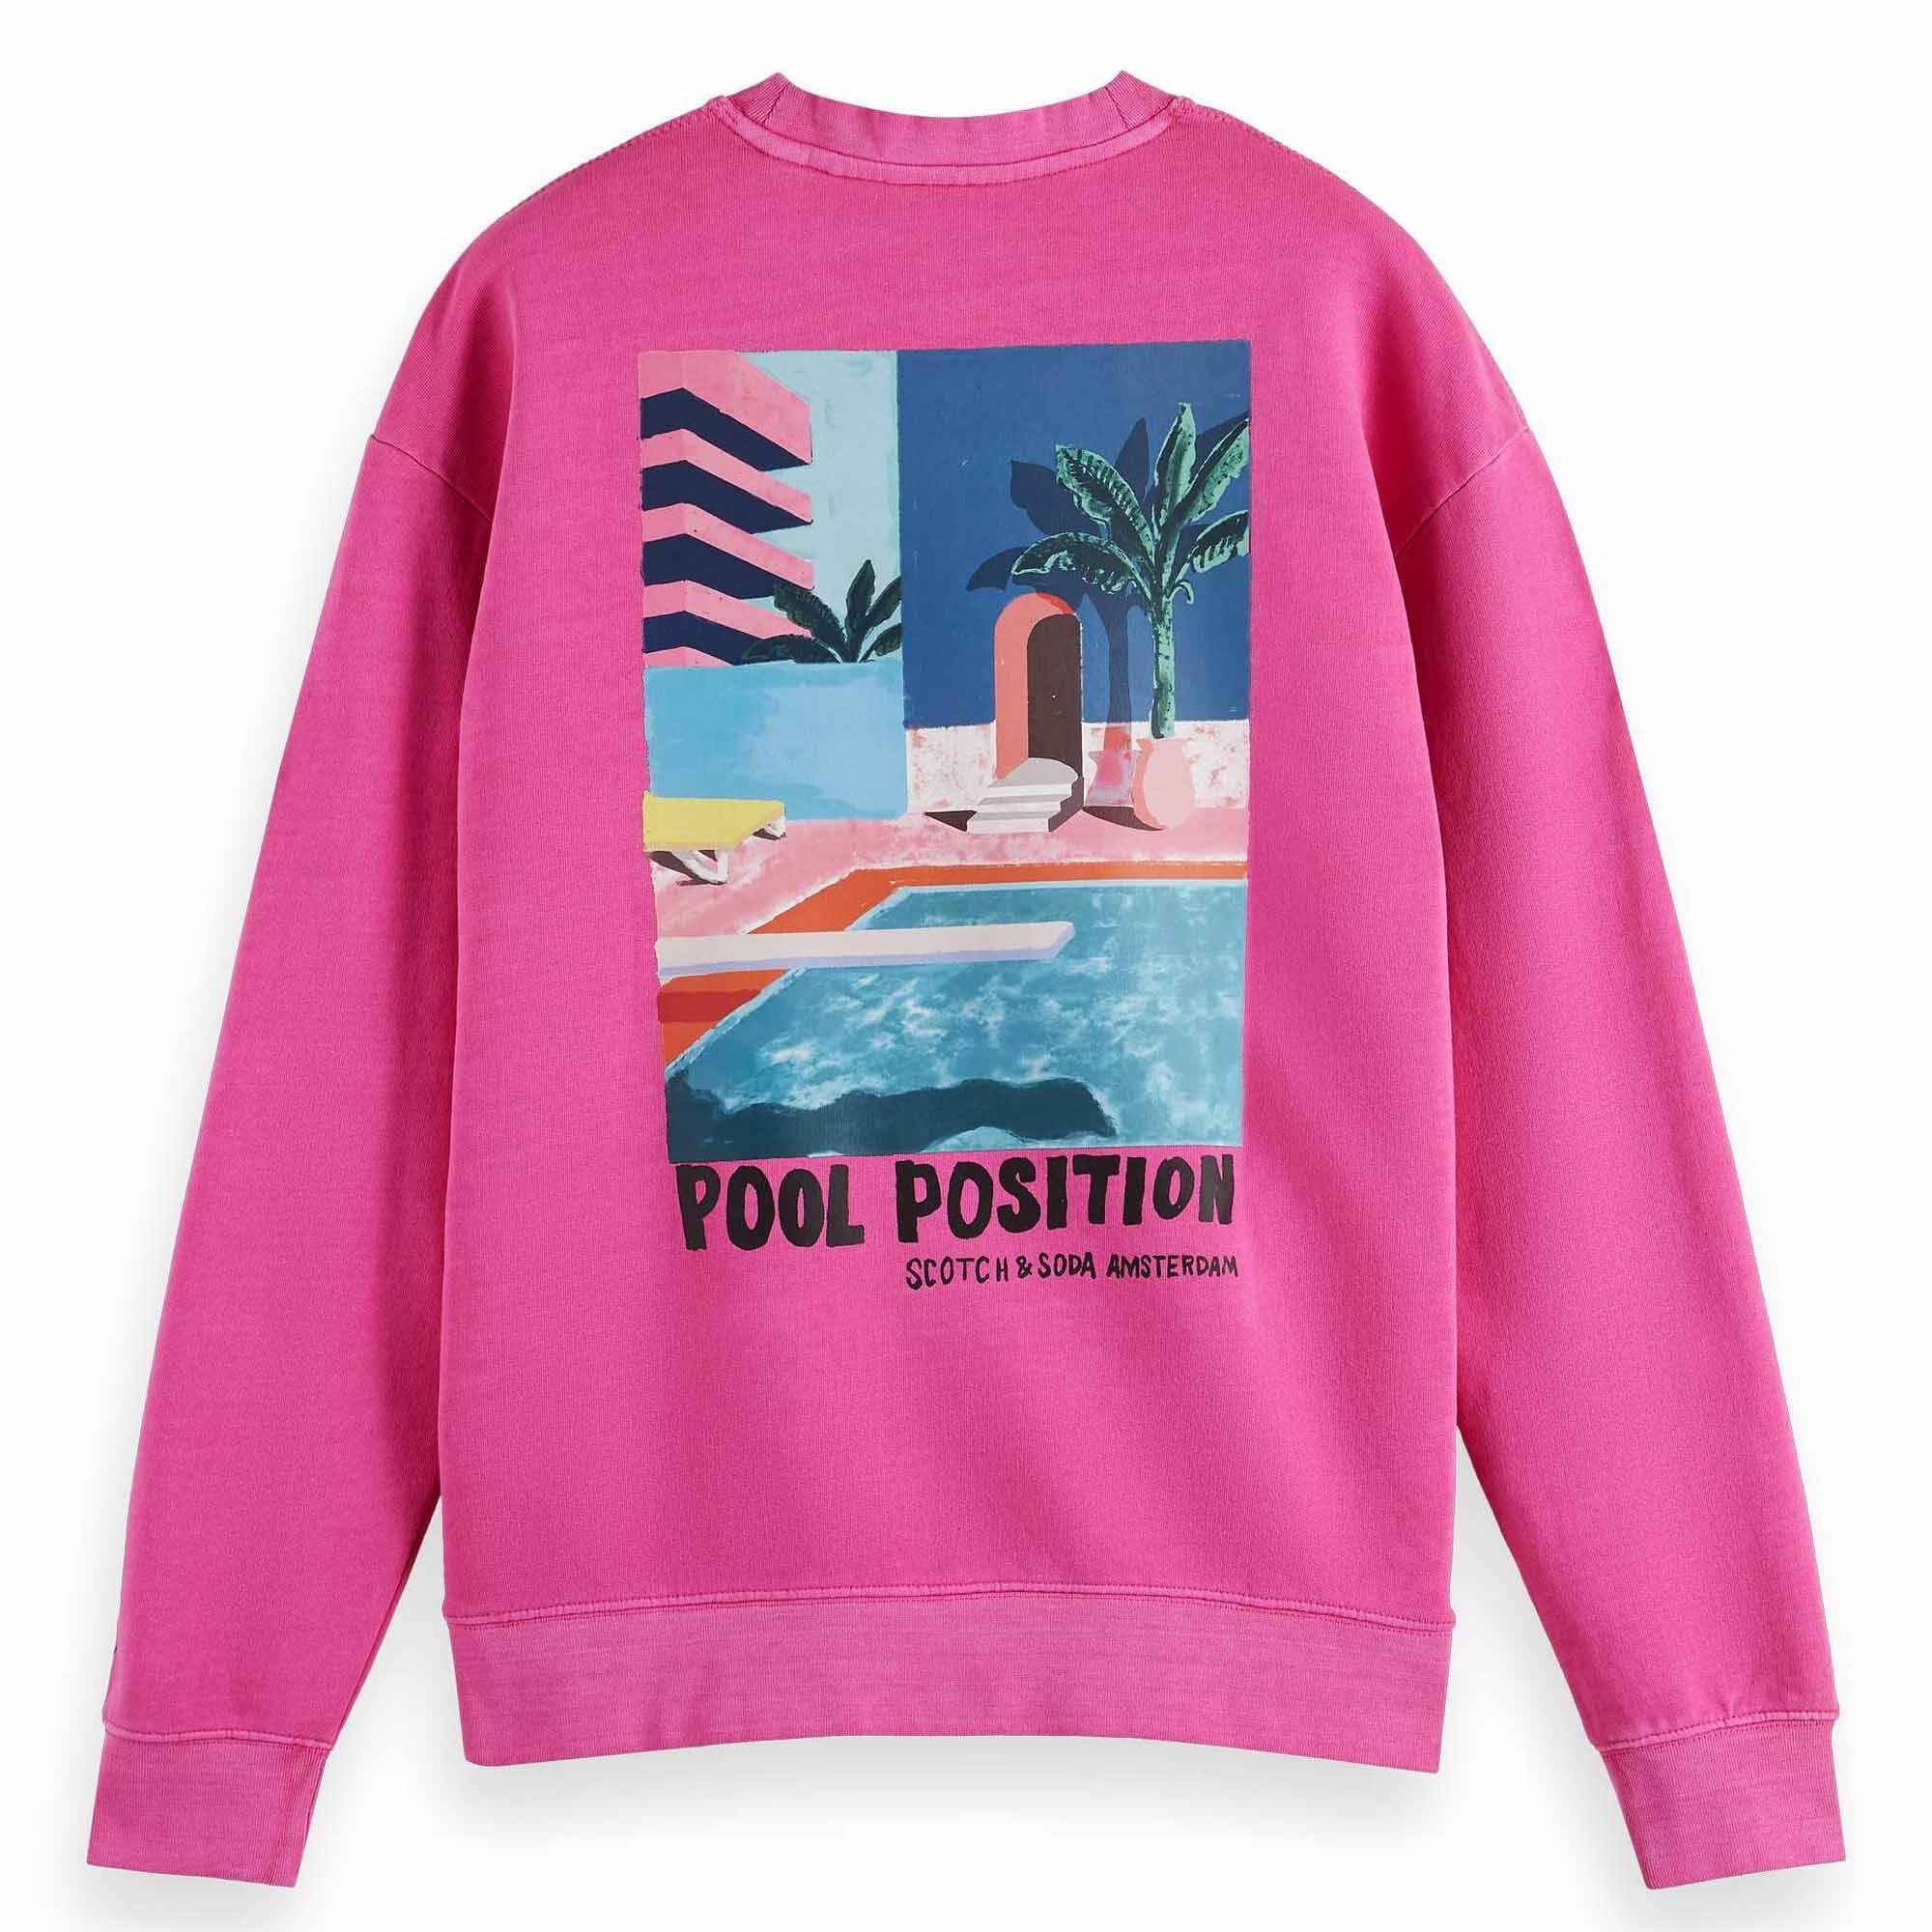 Scotch & Soda Sweatshirt Herren Printed Sweatshirt Sweatshirt, - Rundhals Pink